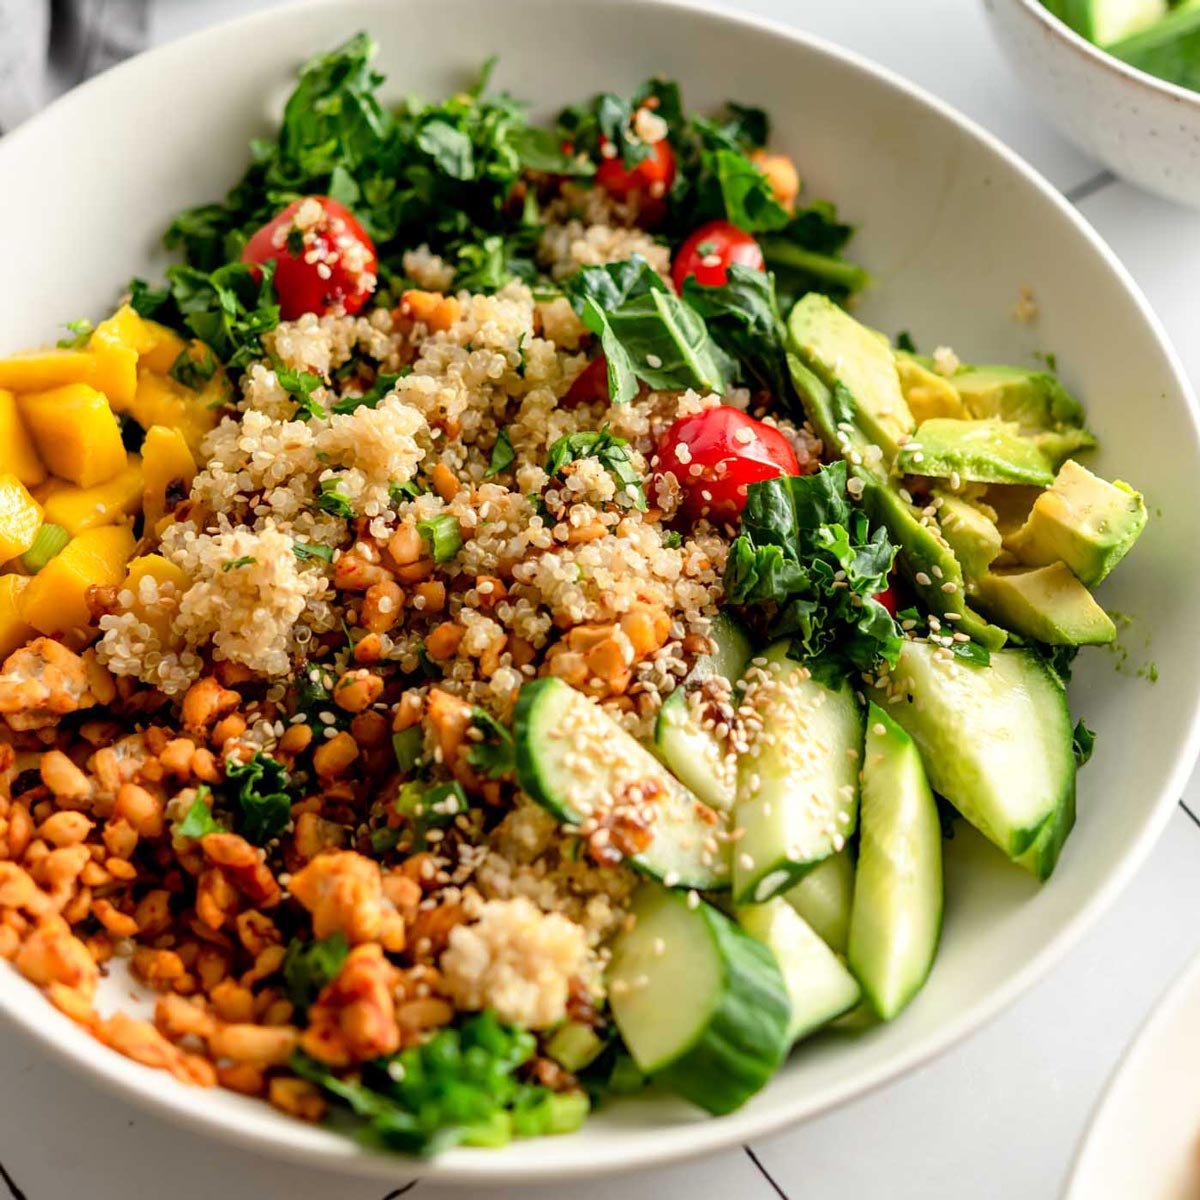 https://runningonrealfood.com/wp-content/uploads/2022/07/vegan-healthy-grain-bowl-with-kale-tempeh-quinoa-6.jpg